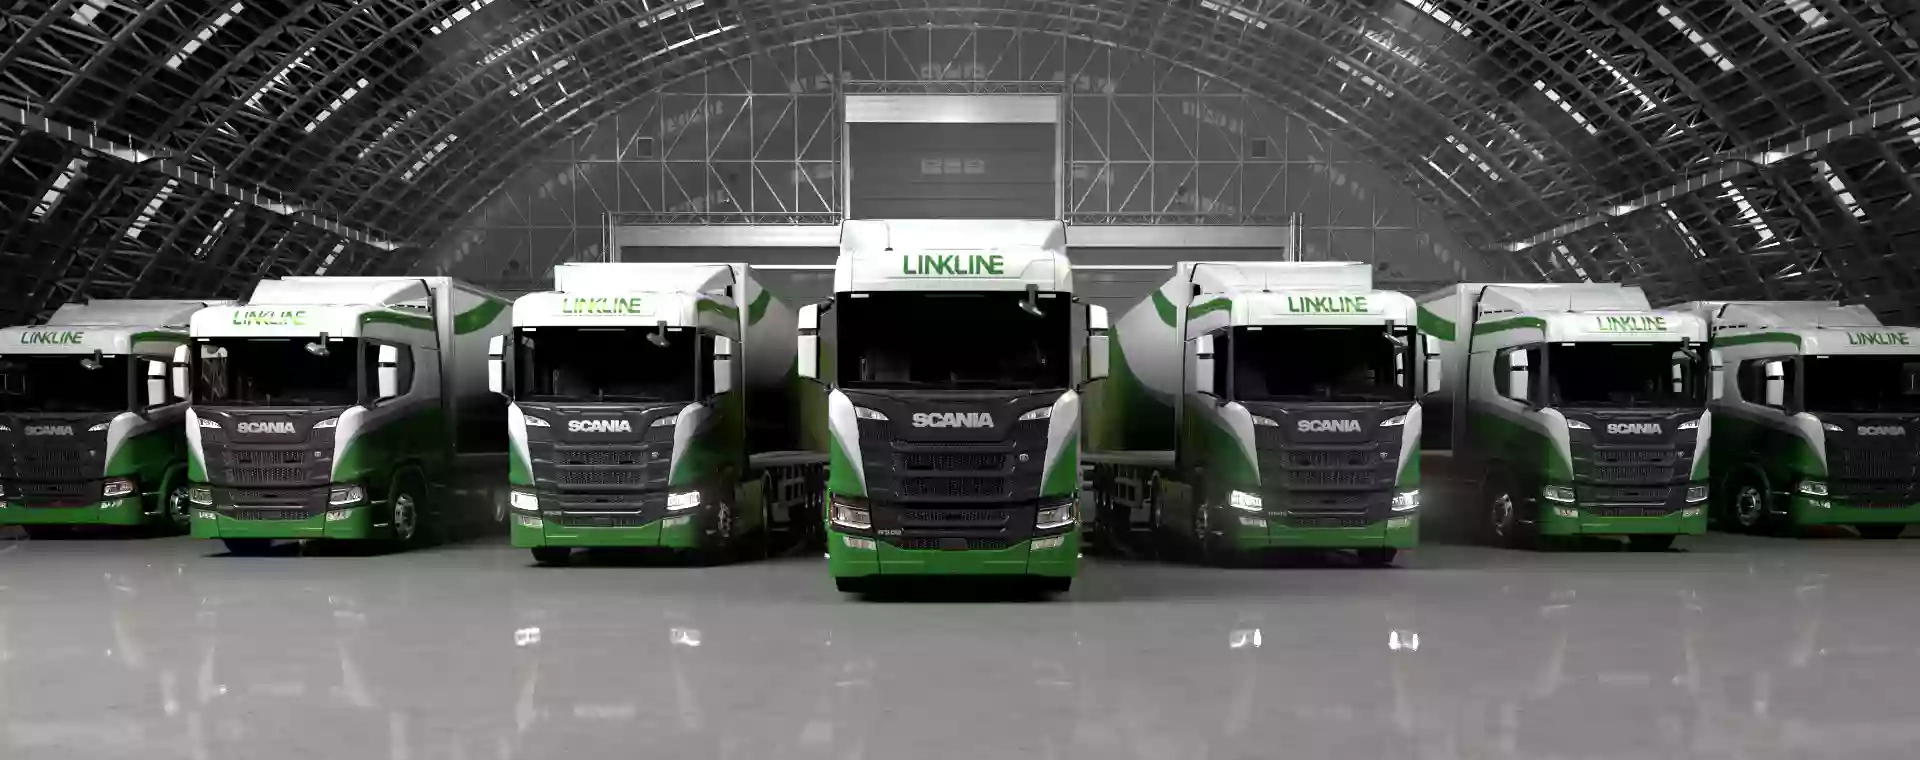 Linkline Transport Ltd